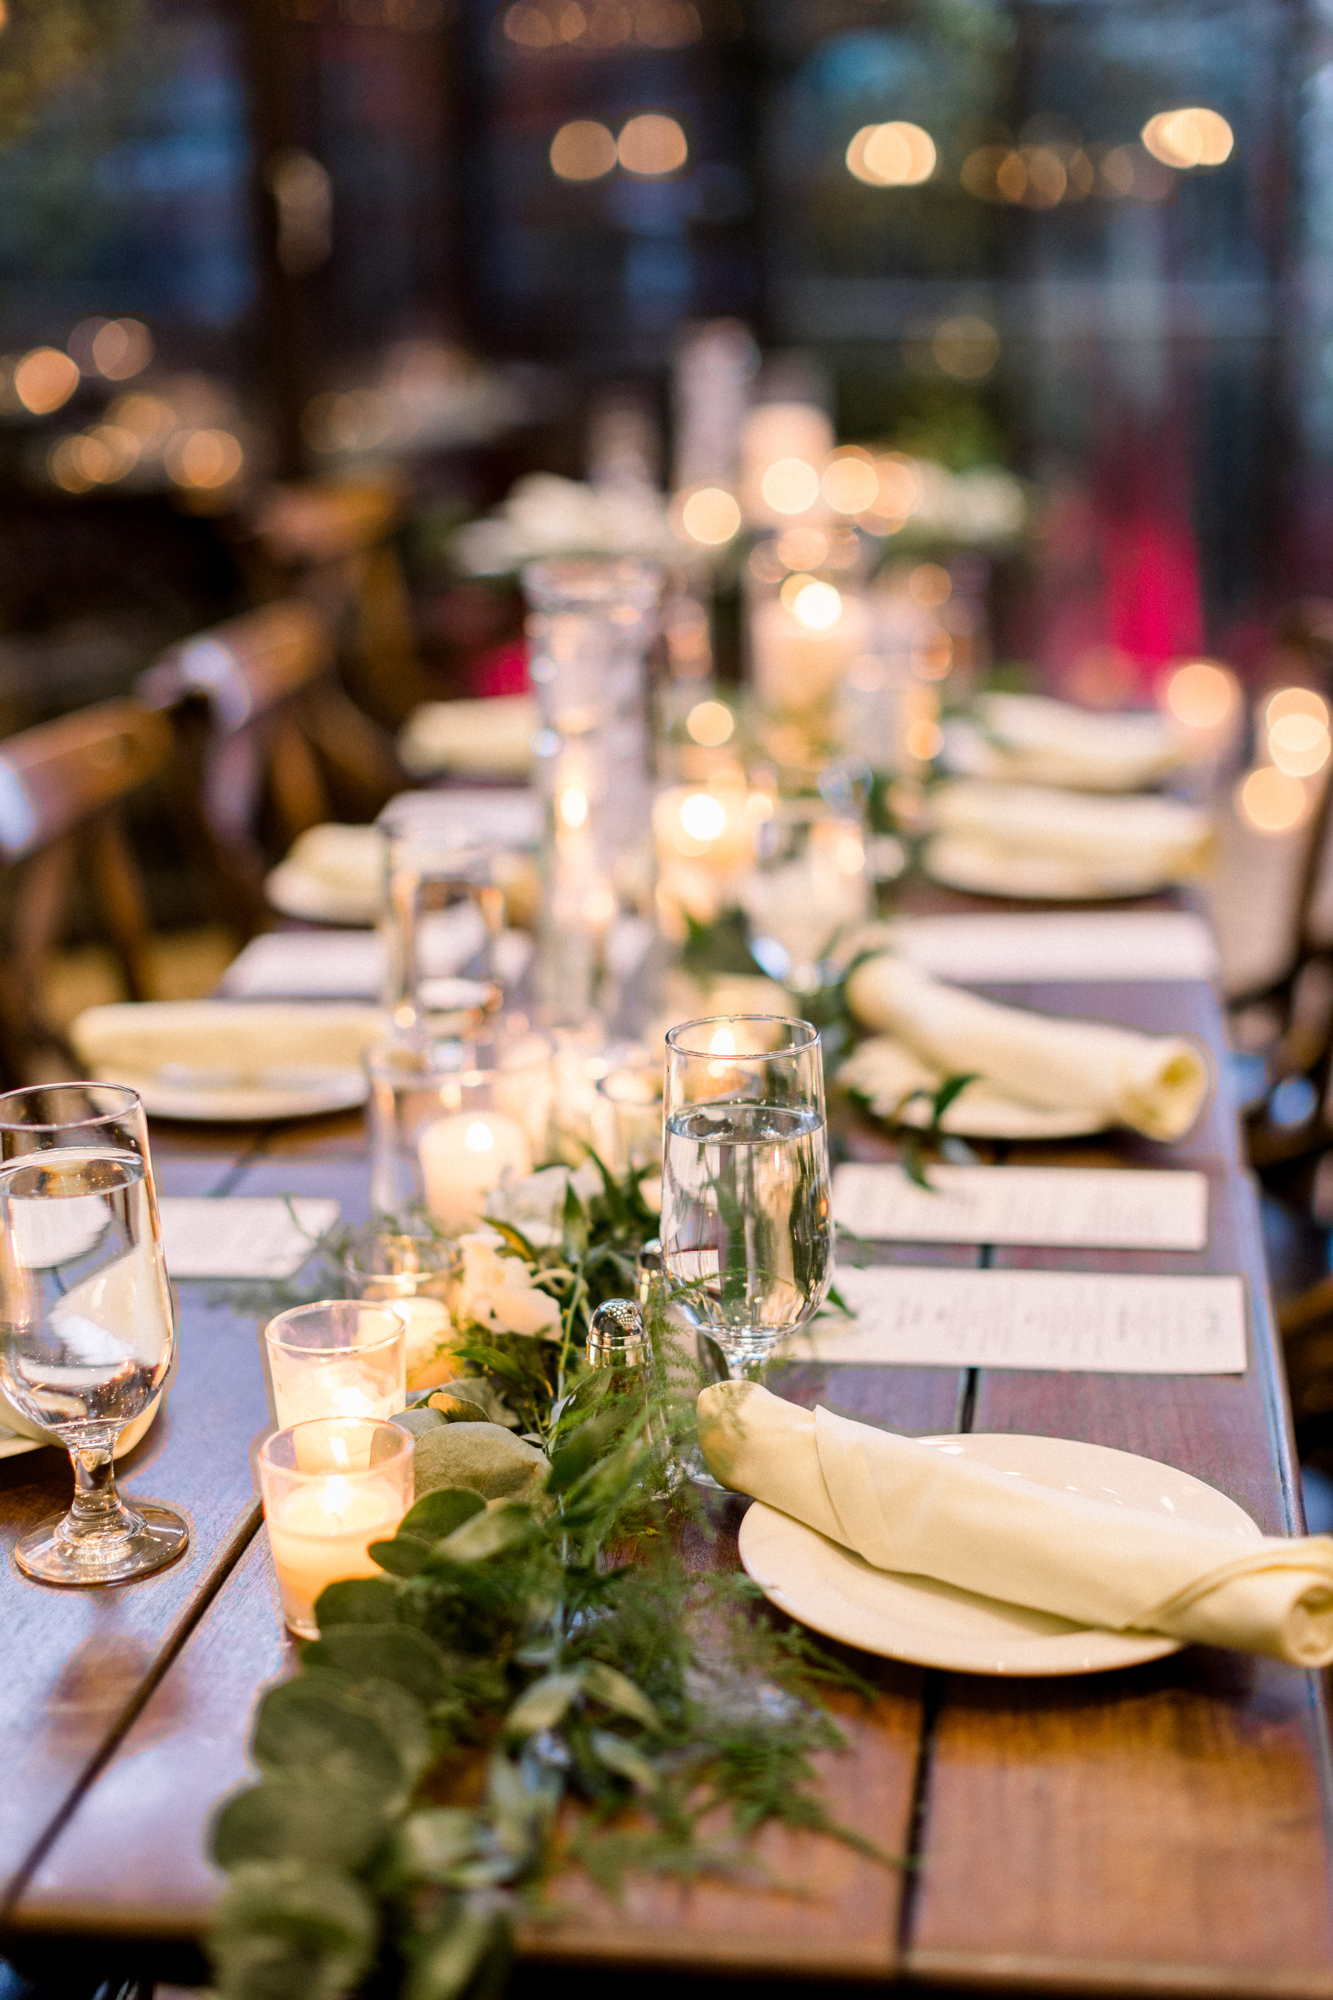 MyMoon wedding reception table ideas